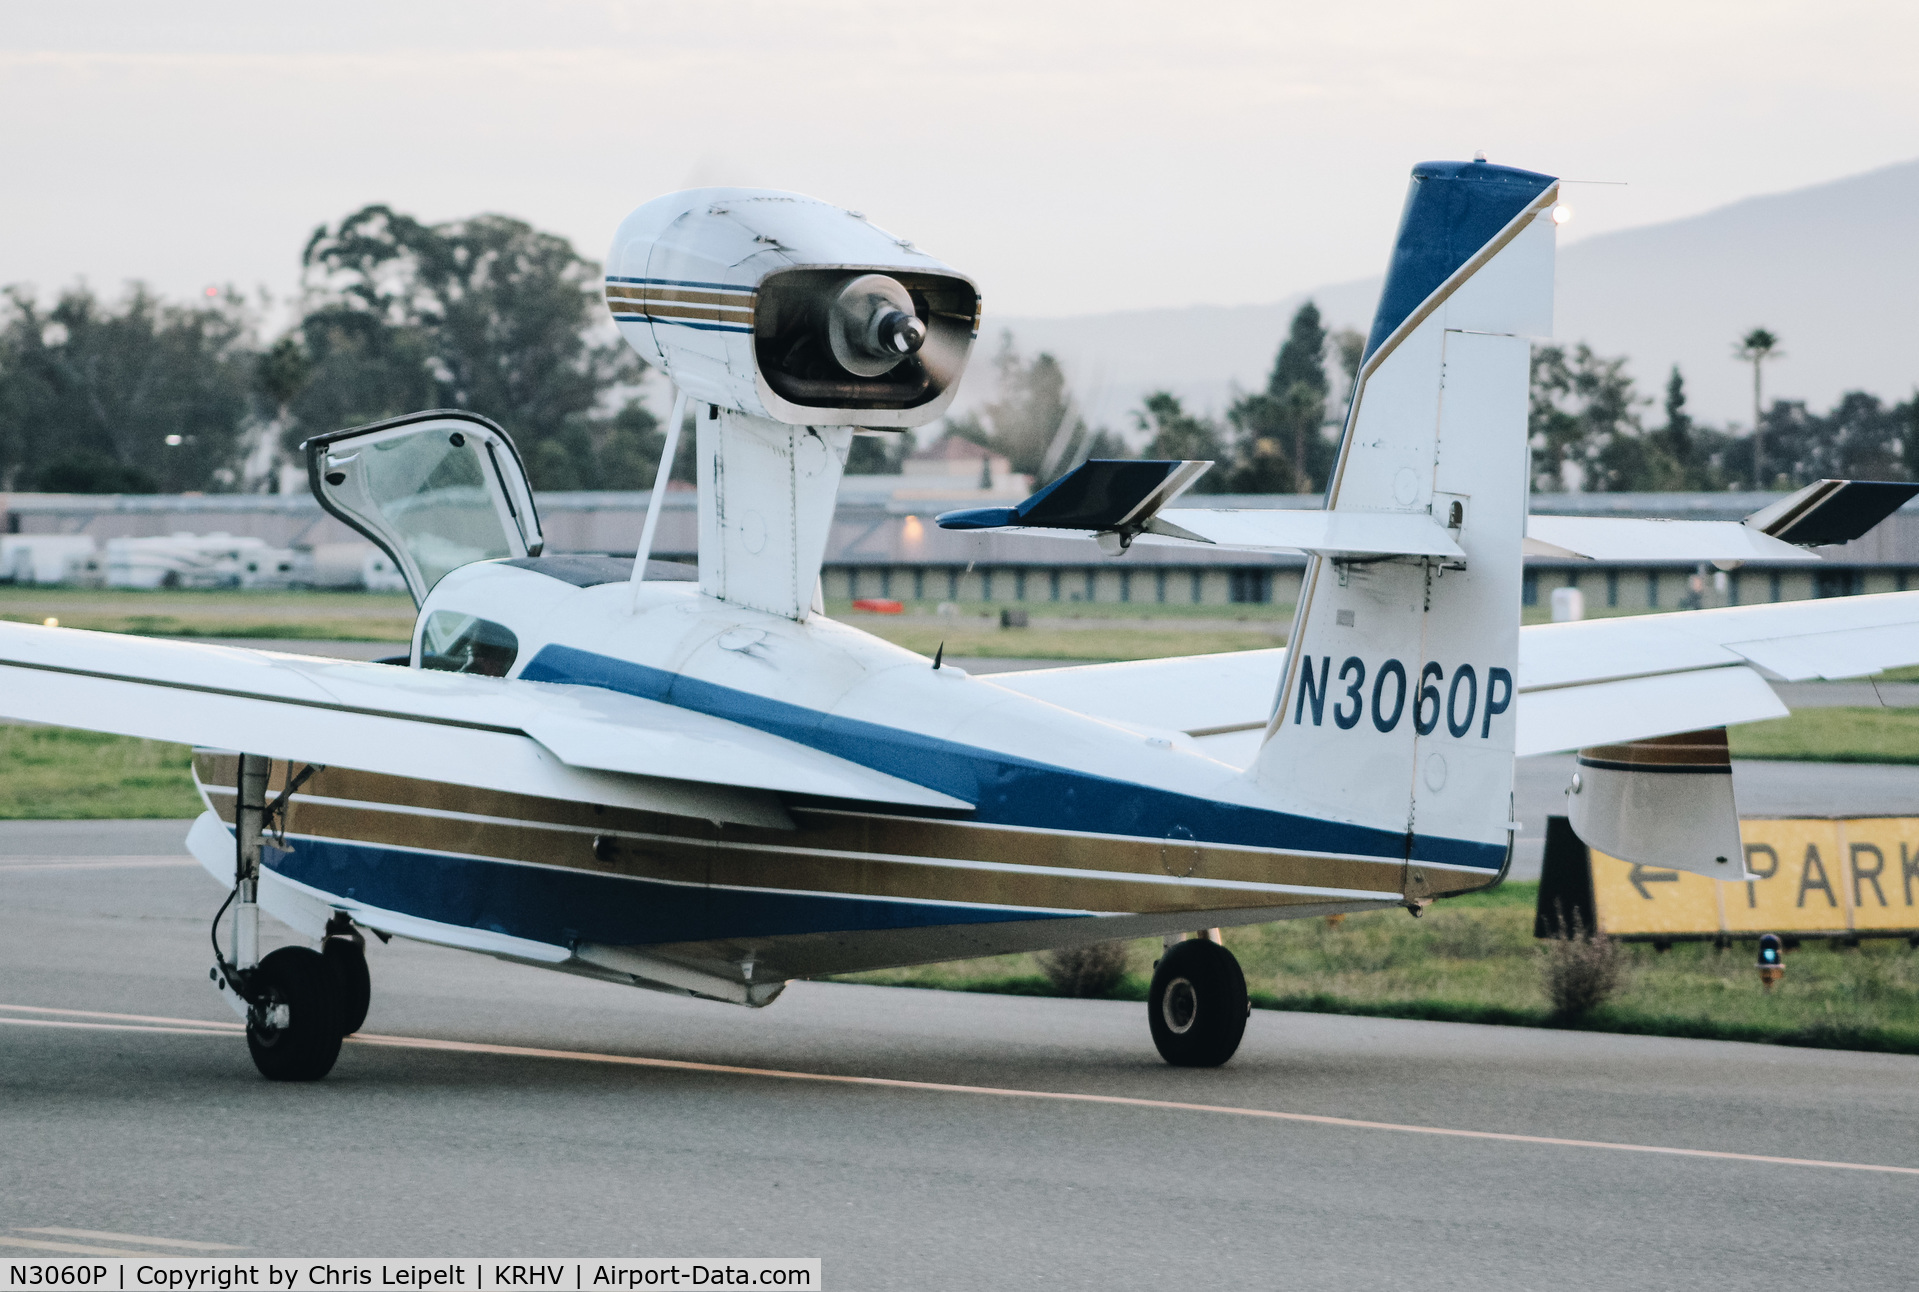 N3060P, 1979 Consolidated Aeronautics Inc. Lake LA-4-200 C/N 971, 1979 Lake LA-4-200 taxing to its hangar after landing at Reid Hillview Airport, San Jose, CA.